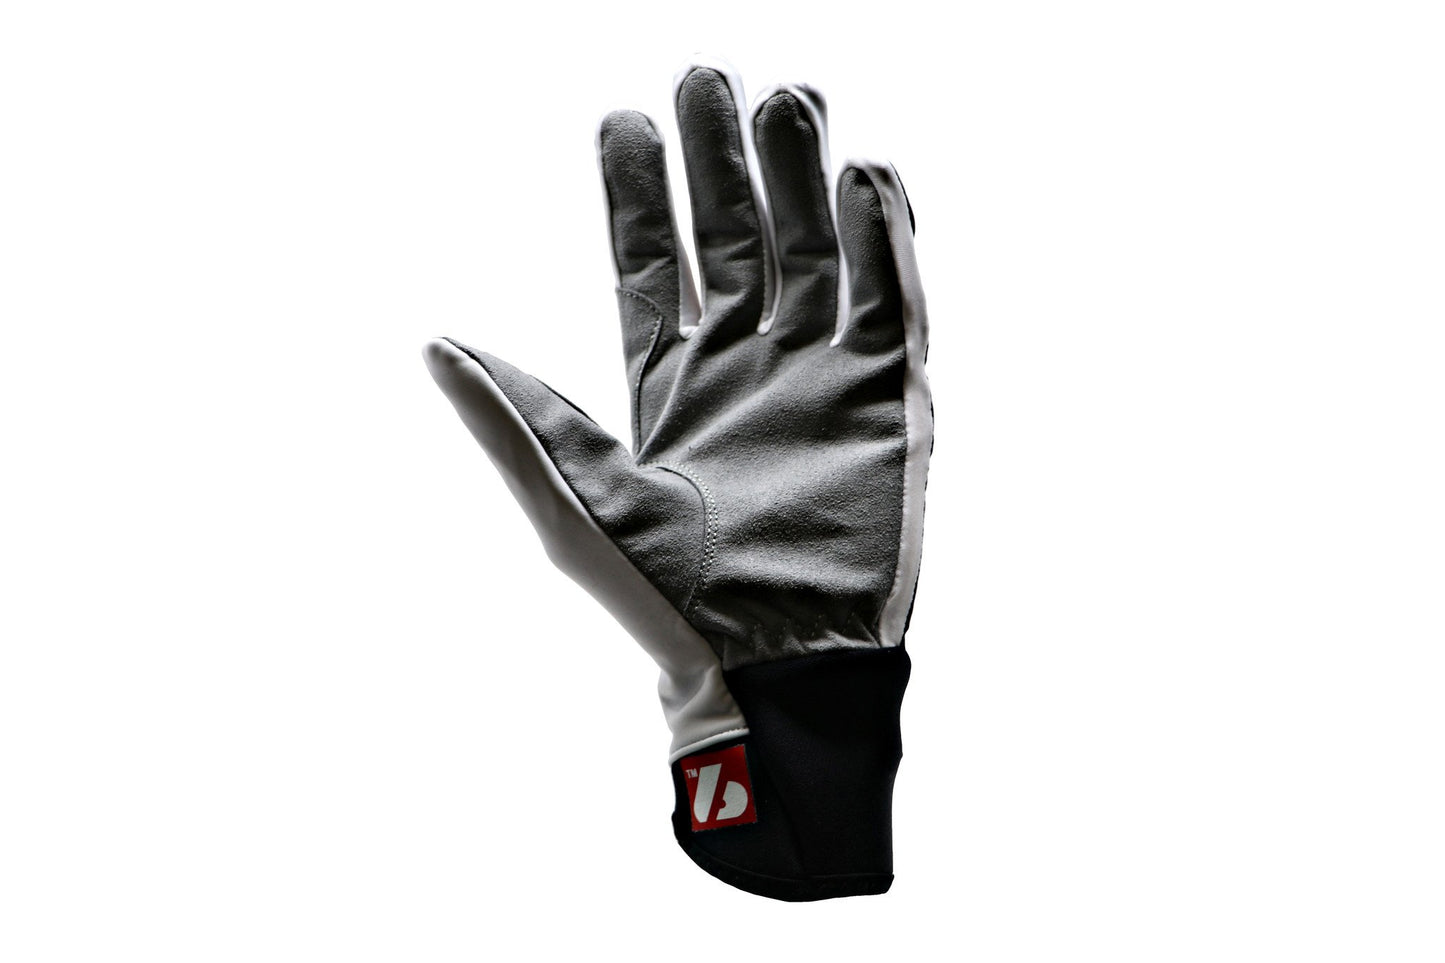 NBG-01 cross-country ski winter gloves -5° to -10°